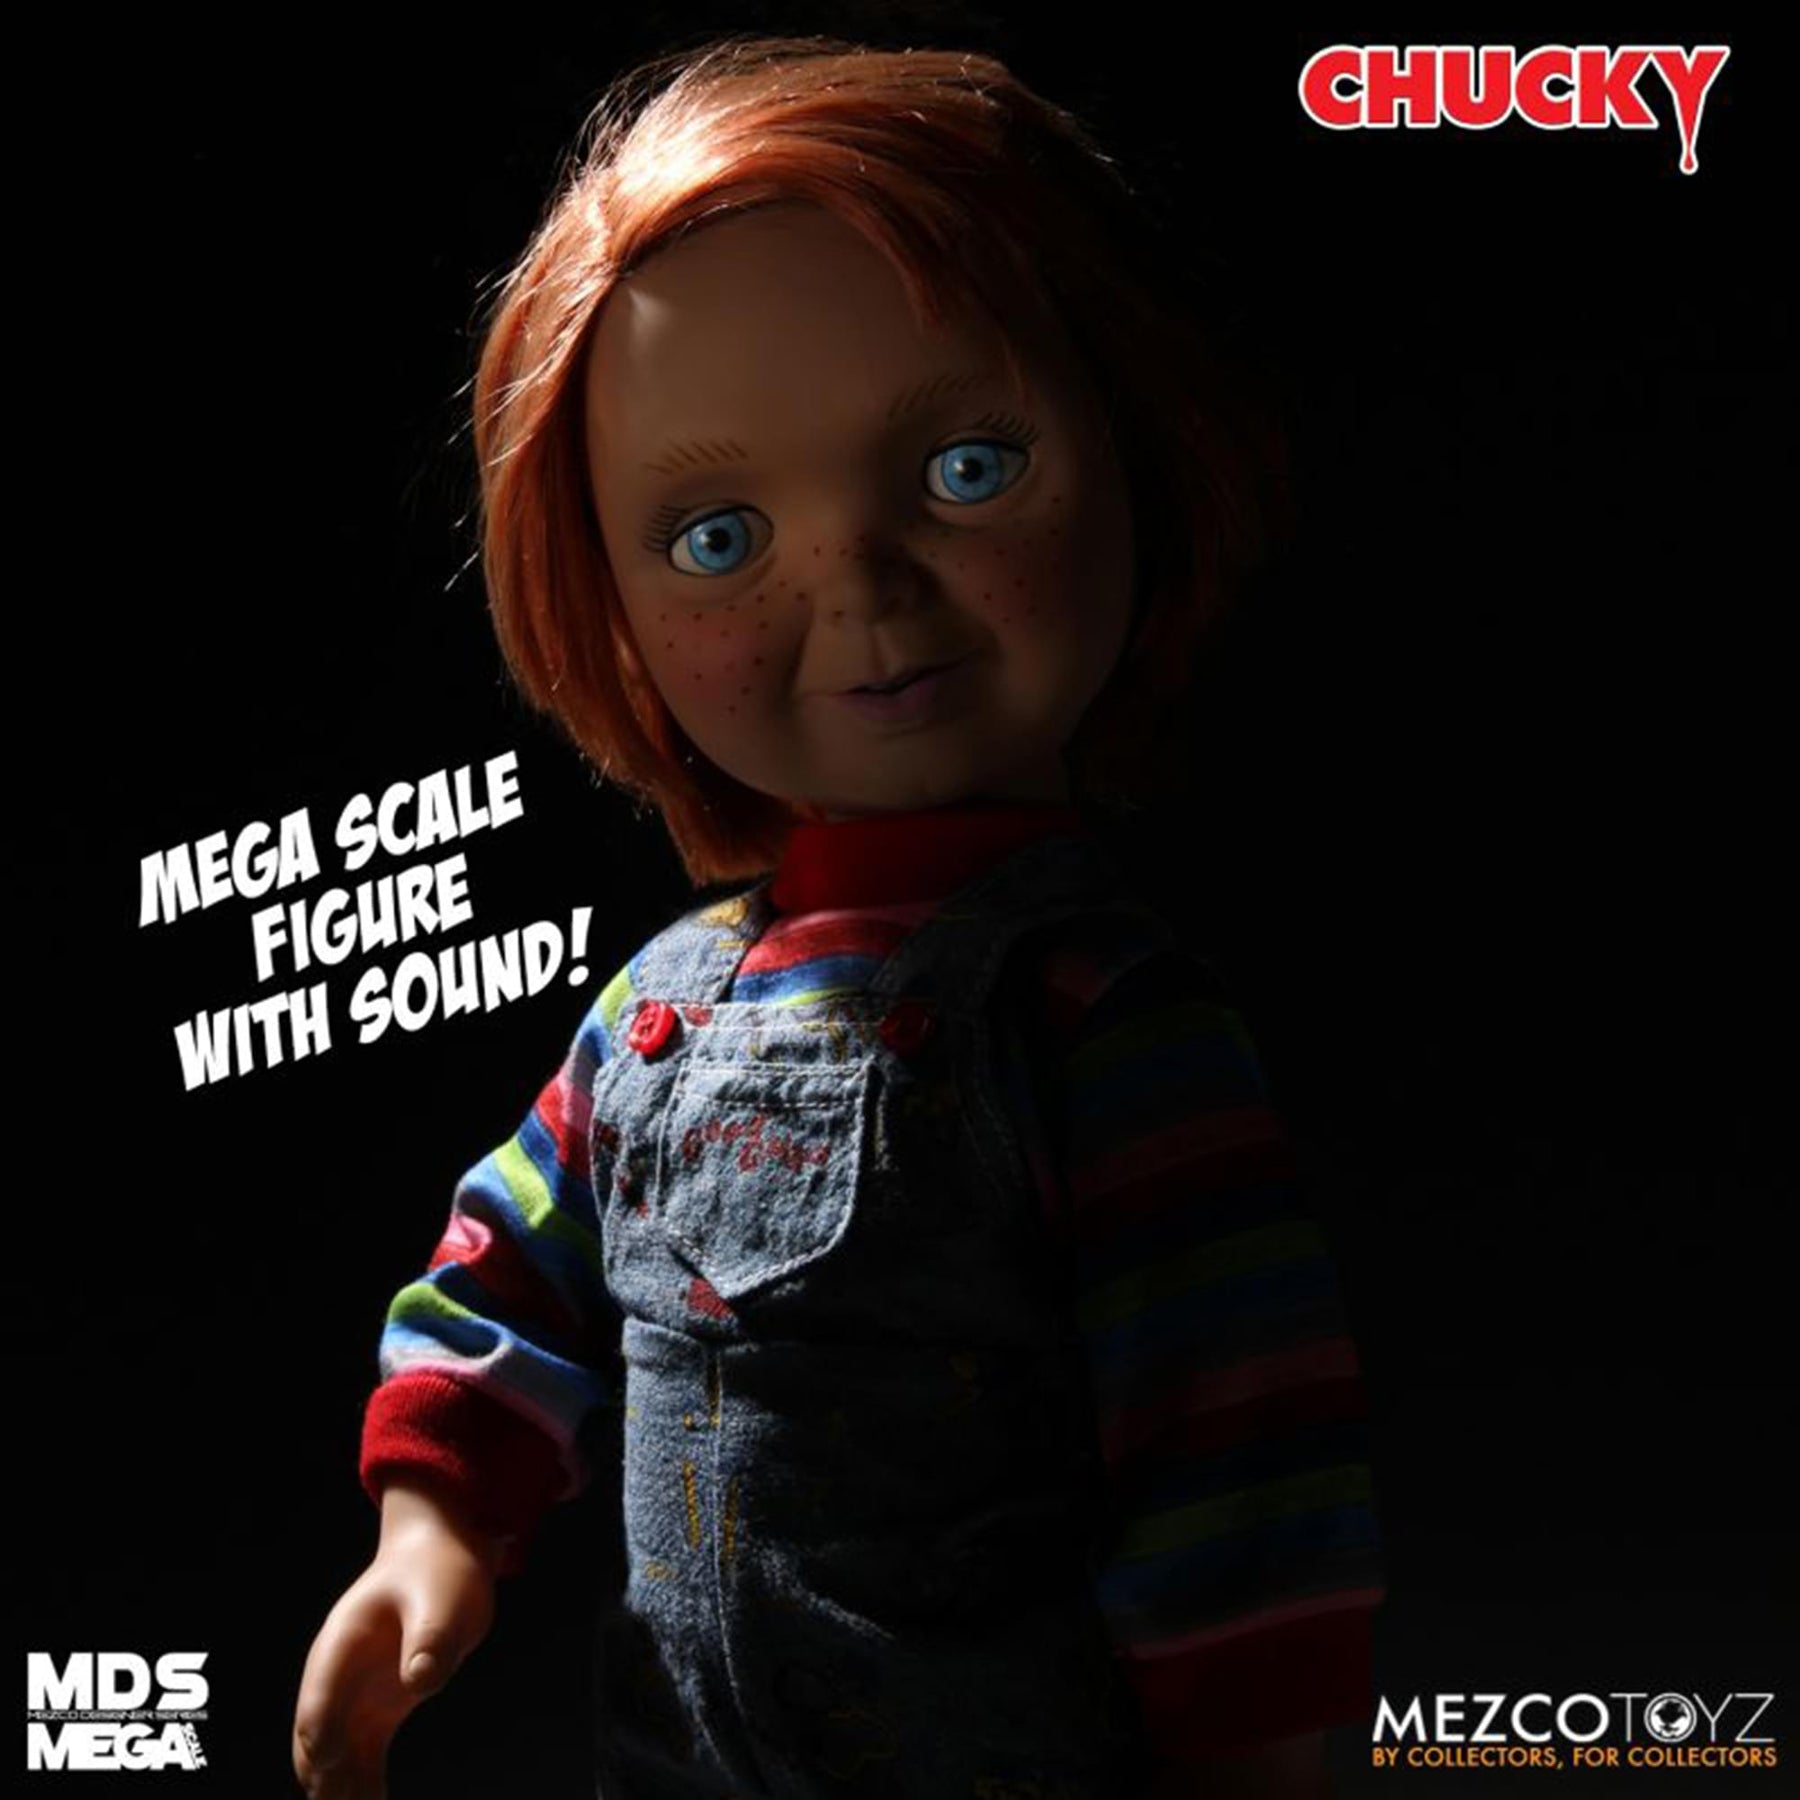 Mezco Toyz Child's Play Good Guys Chucky 15" Talking Doll